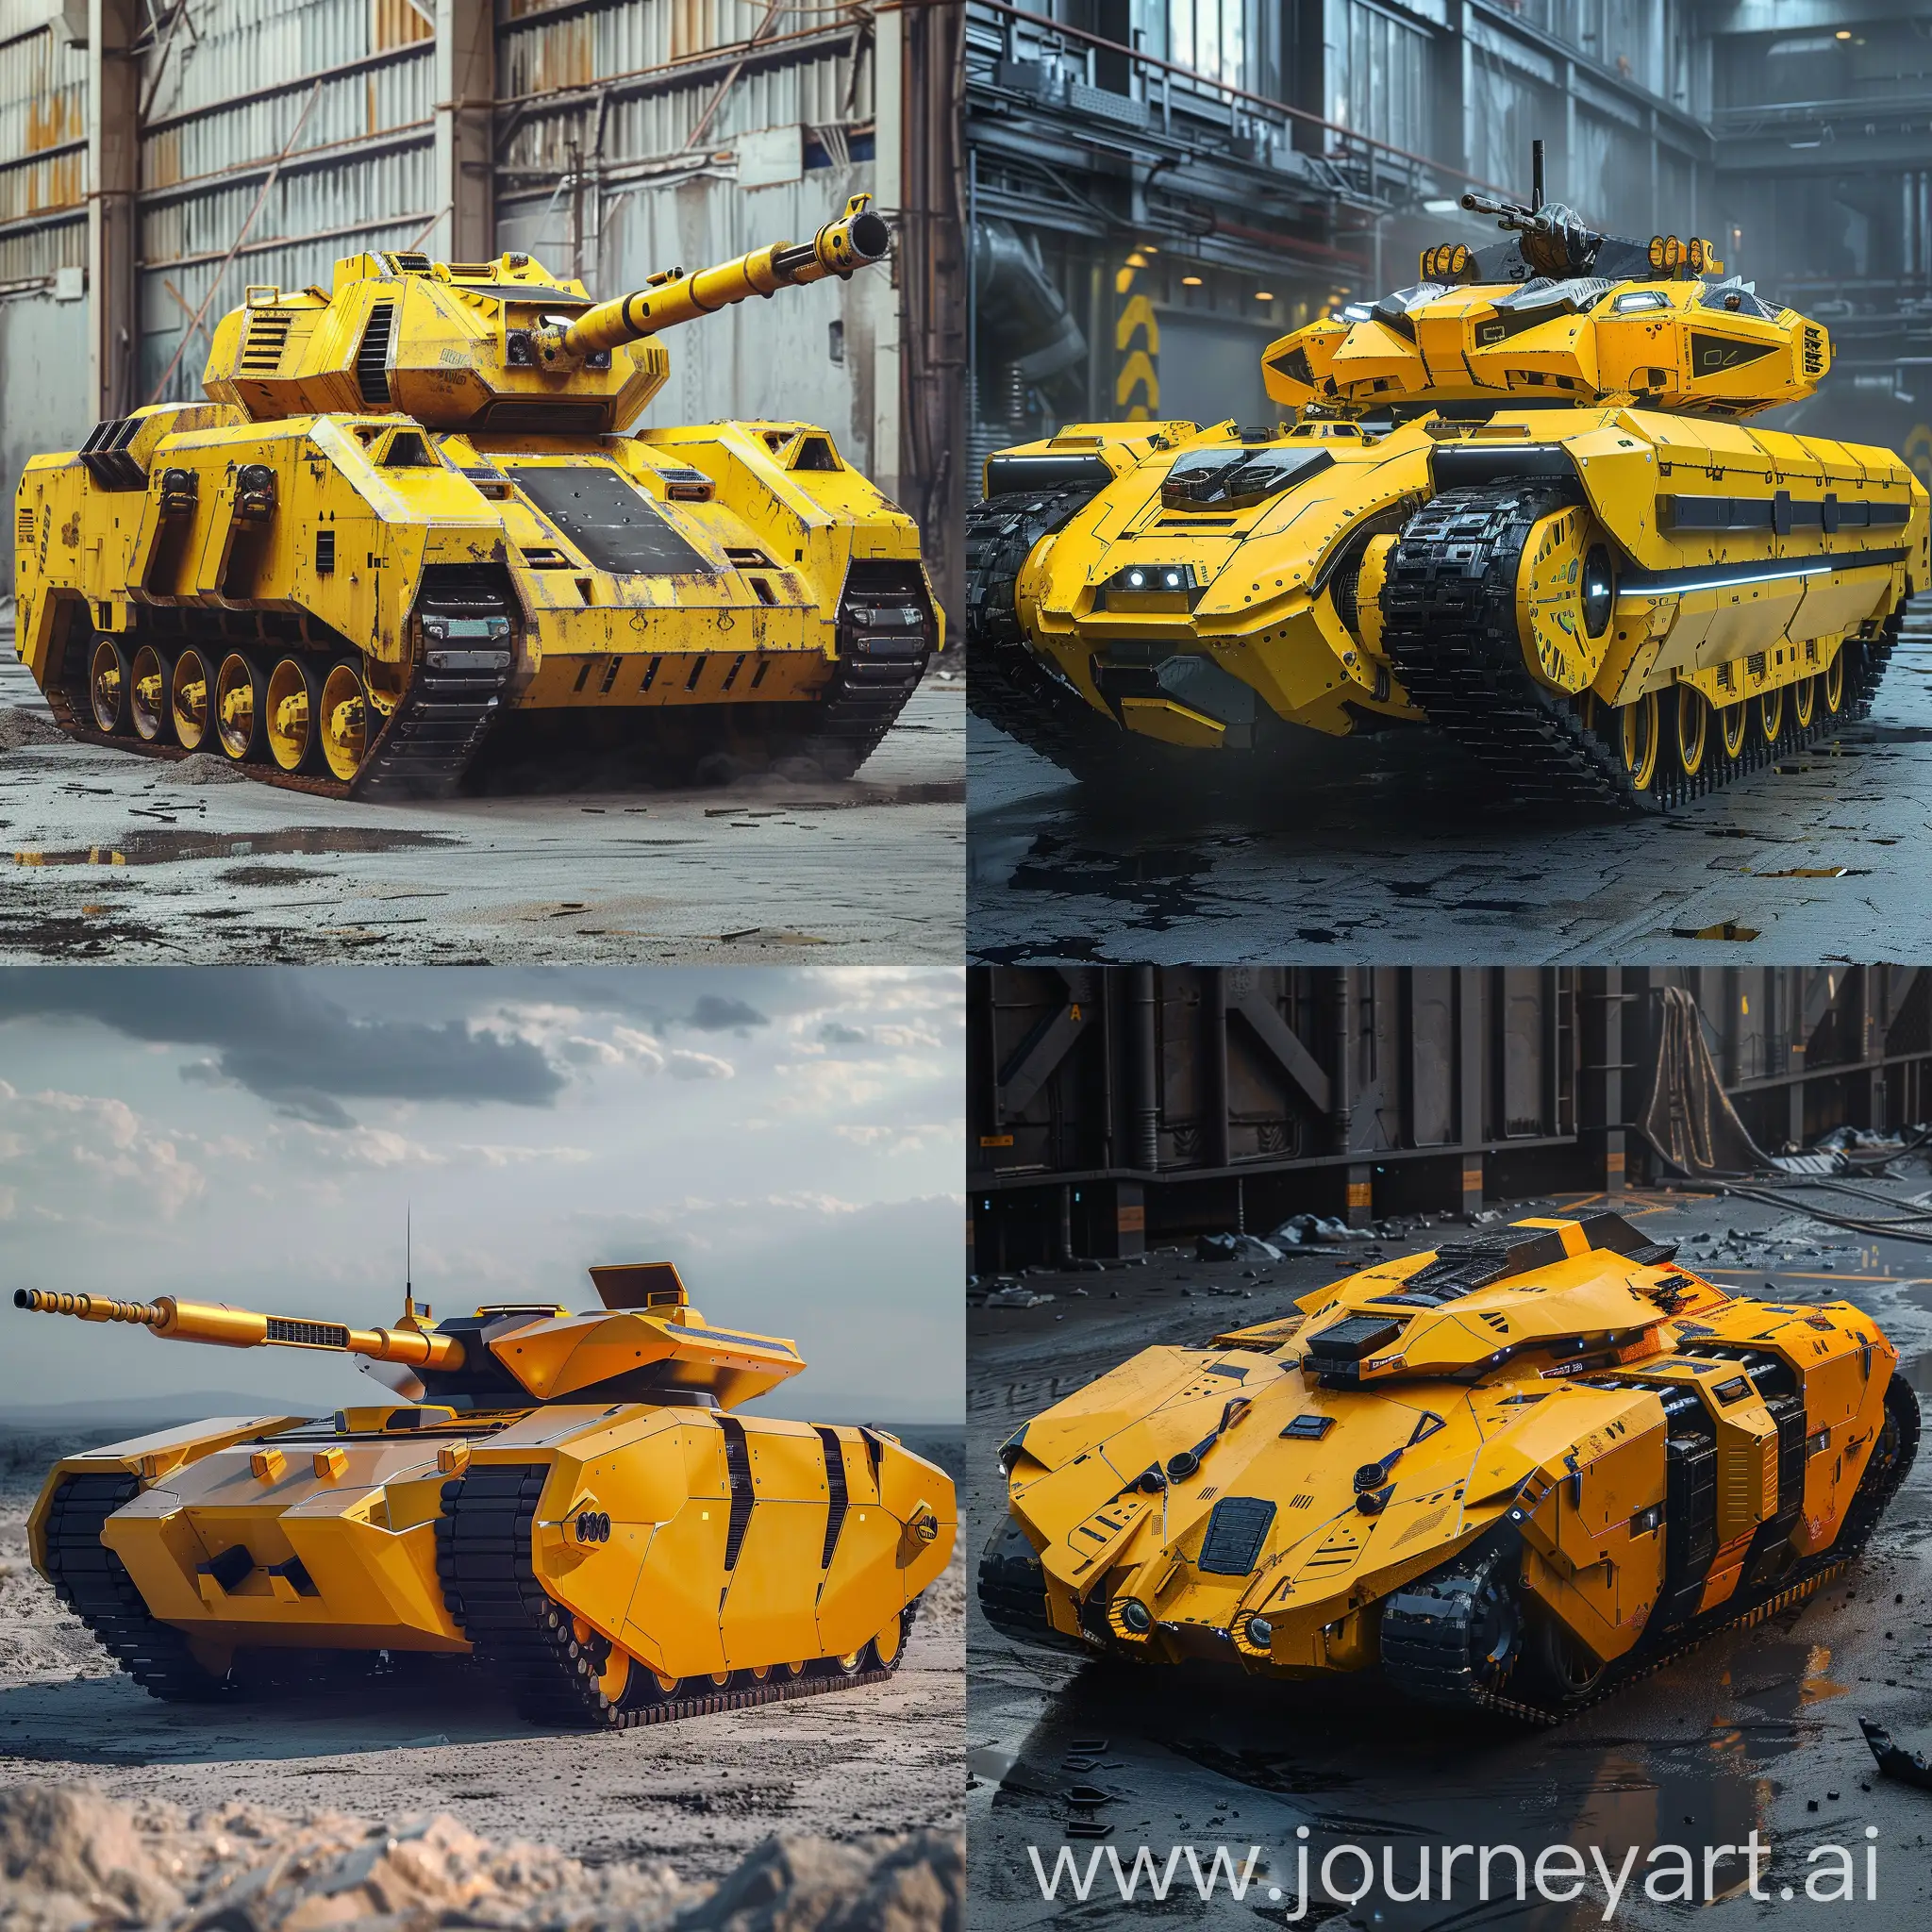 Futuristic-Yellow-Armored-Military-Tank-in-Realistic-FullSize-Photo